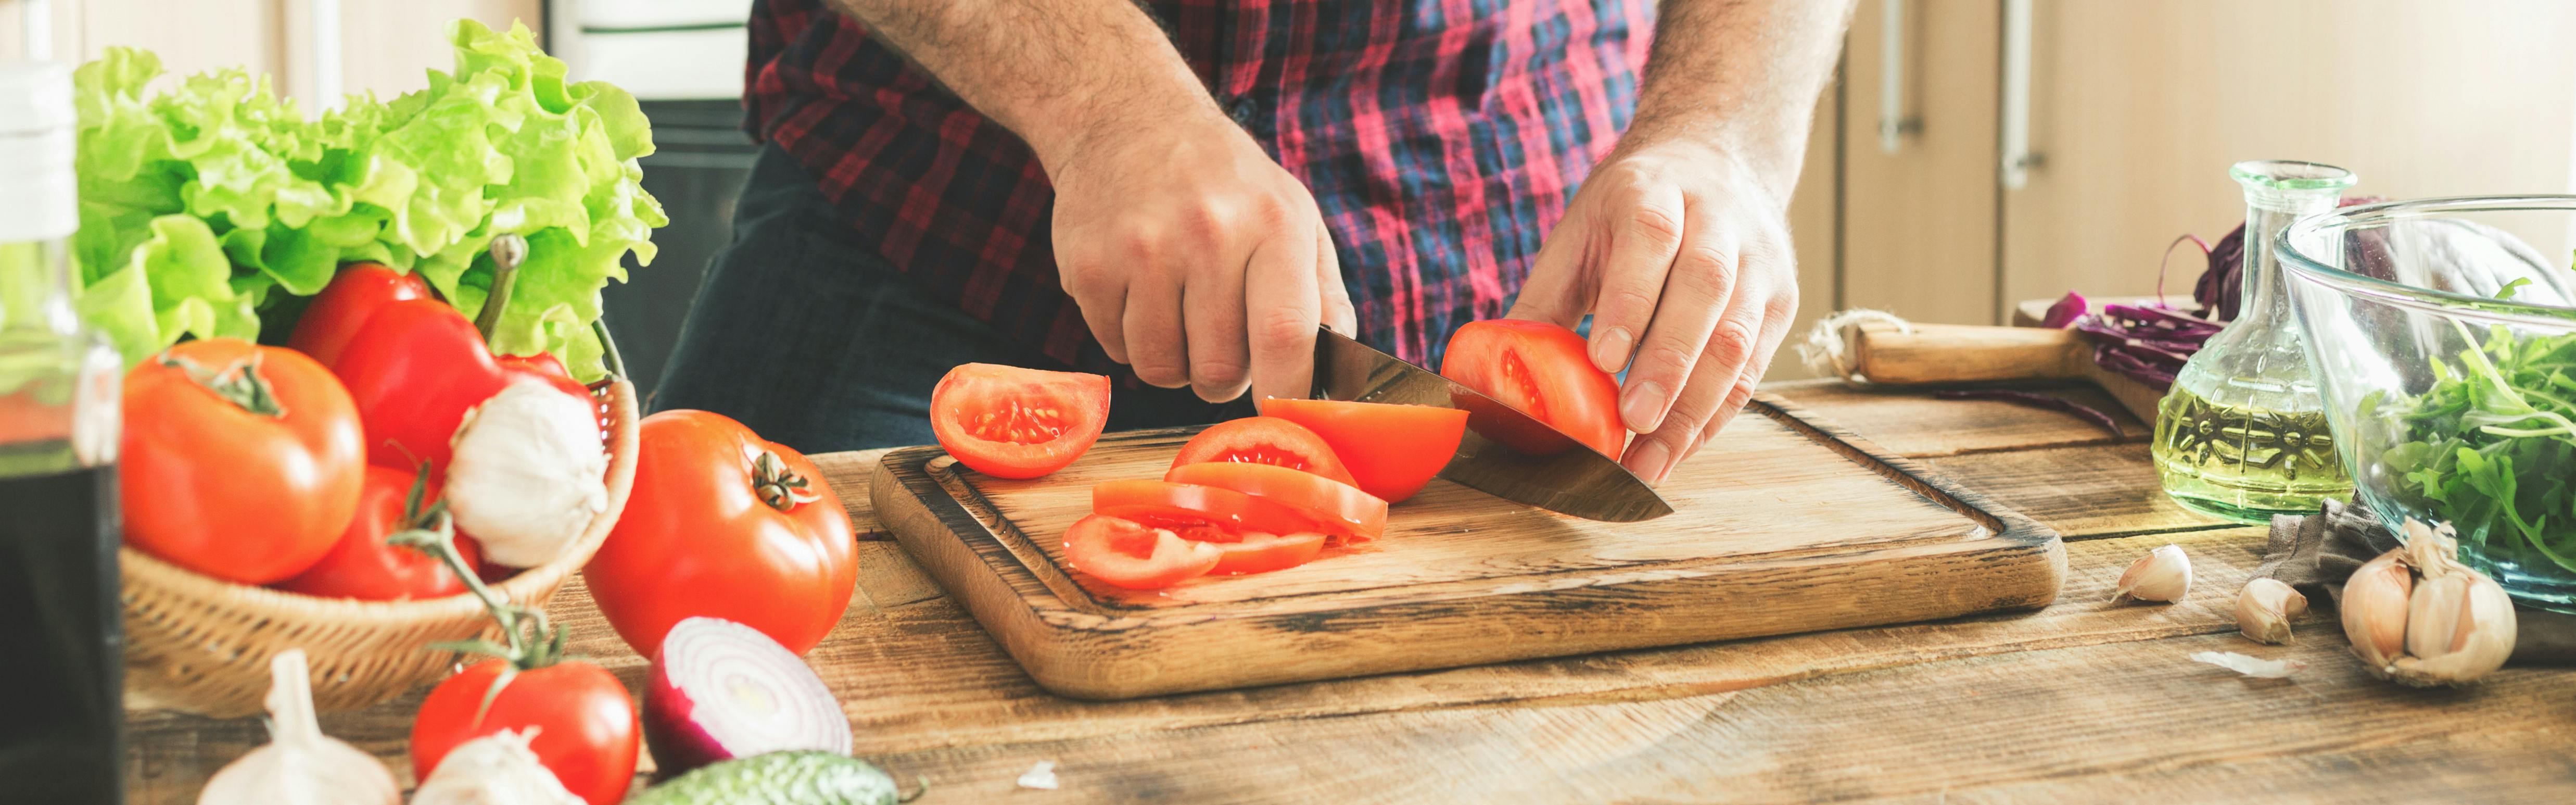 A man cutting a tomato on a cutting board.